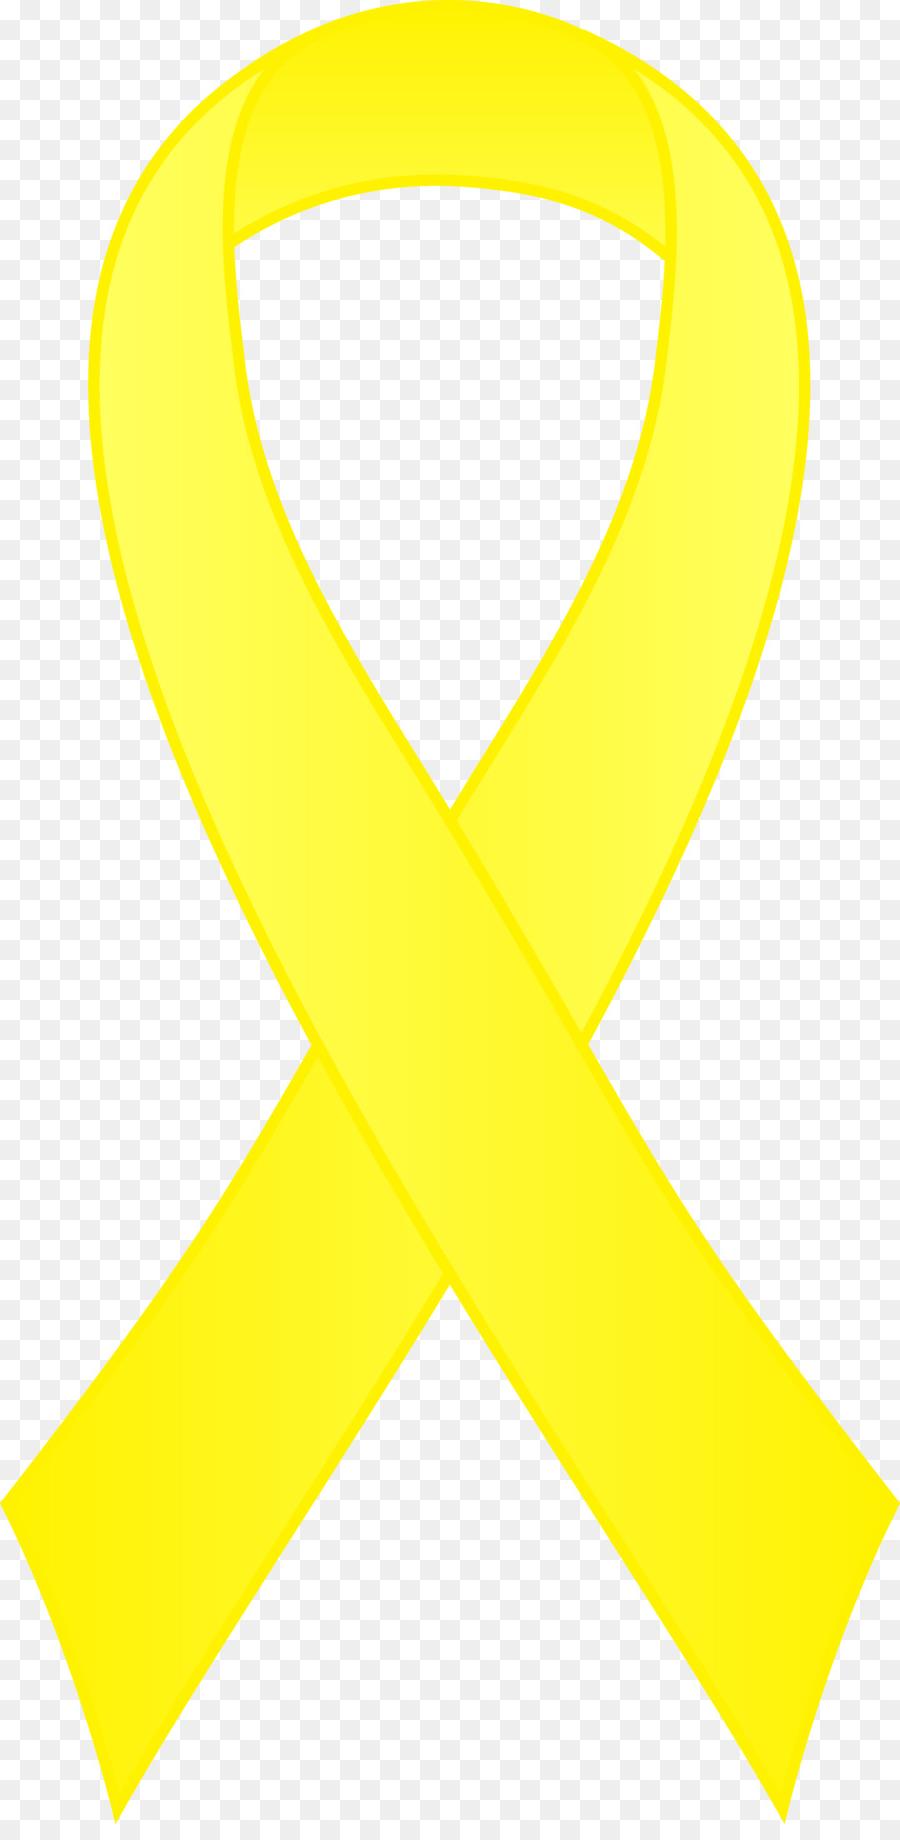 Top yellow ribbon.